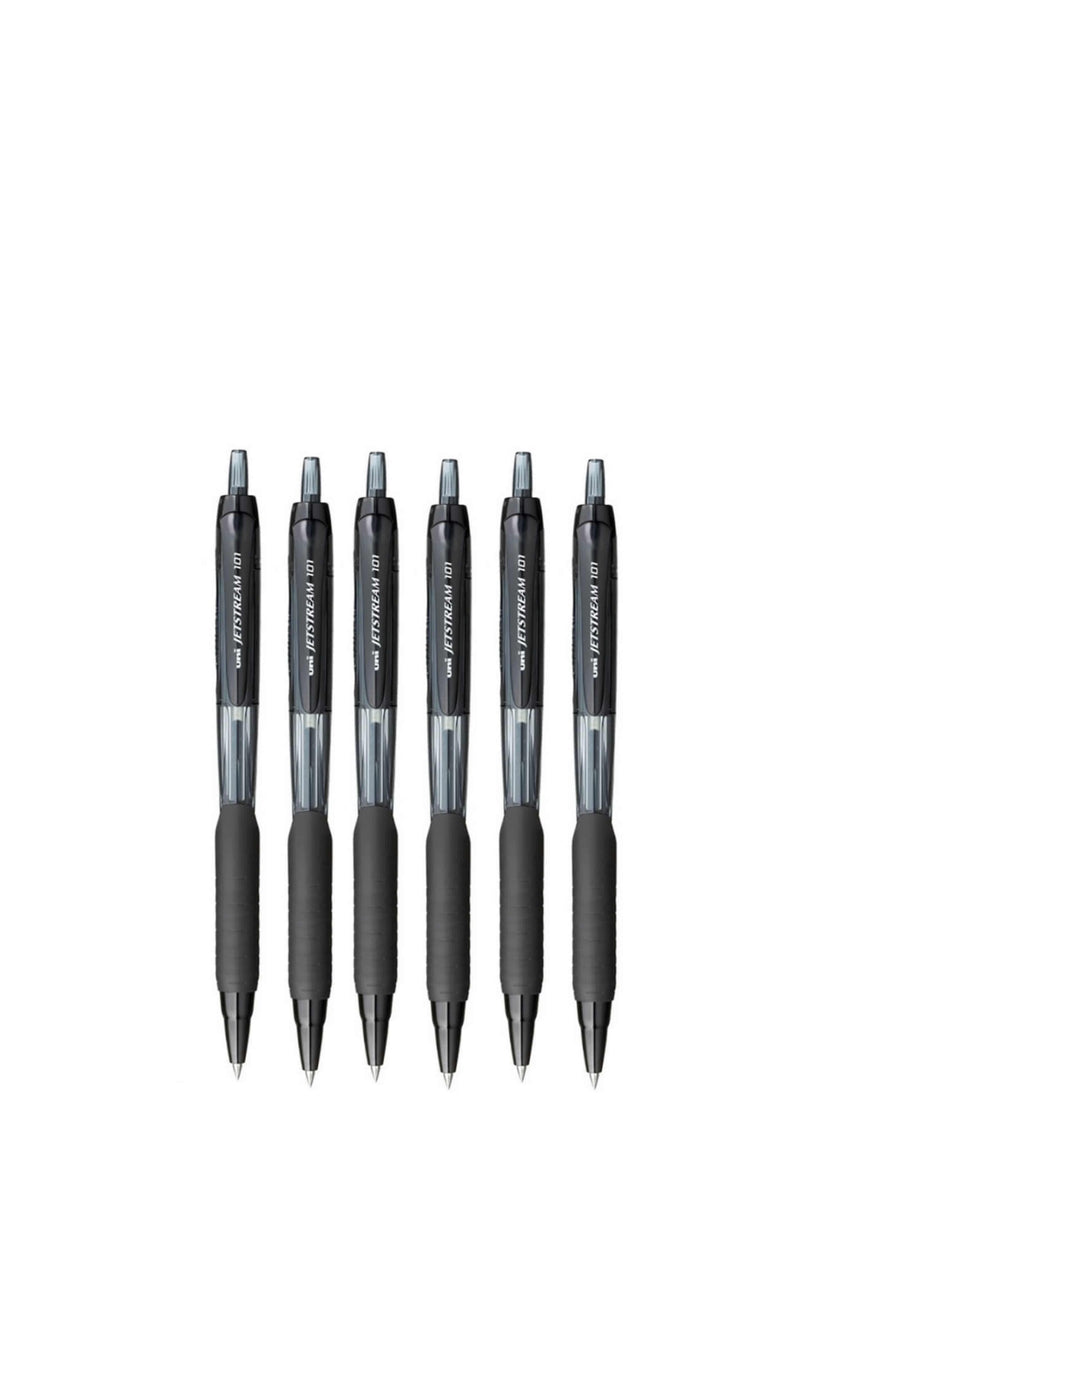 Uniball Jetstream SXN 101 Roller Ball Pen pack of six black pen